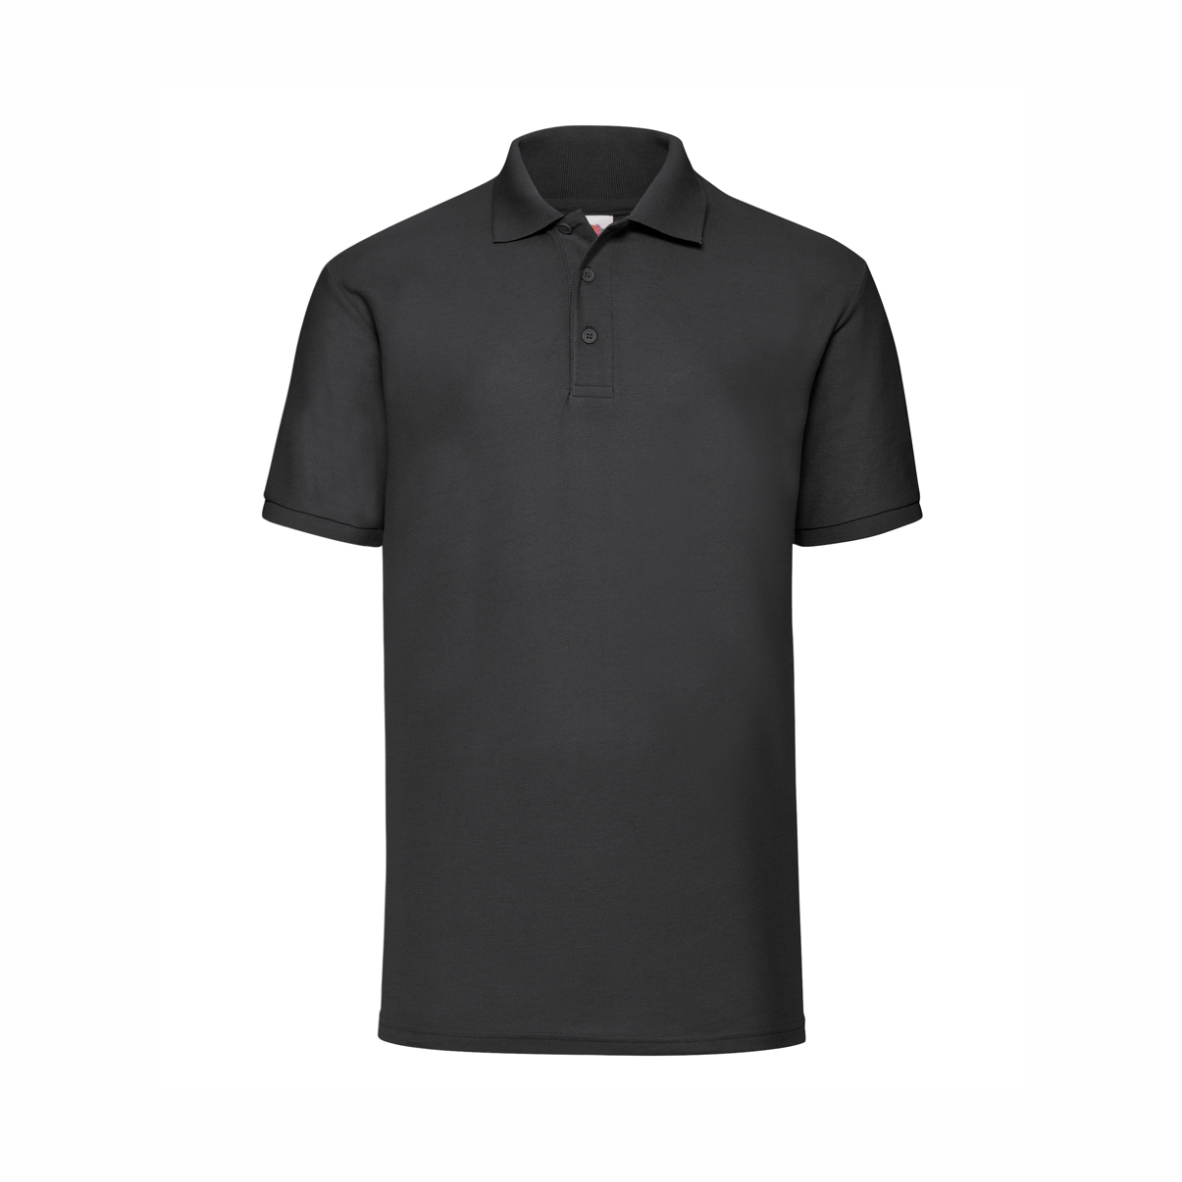 black polo shirt embroidery